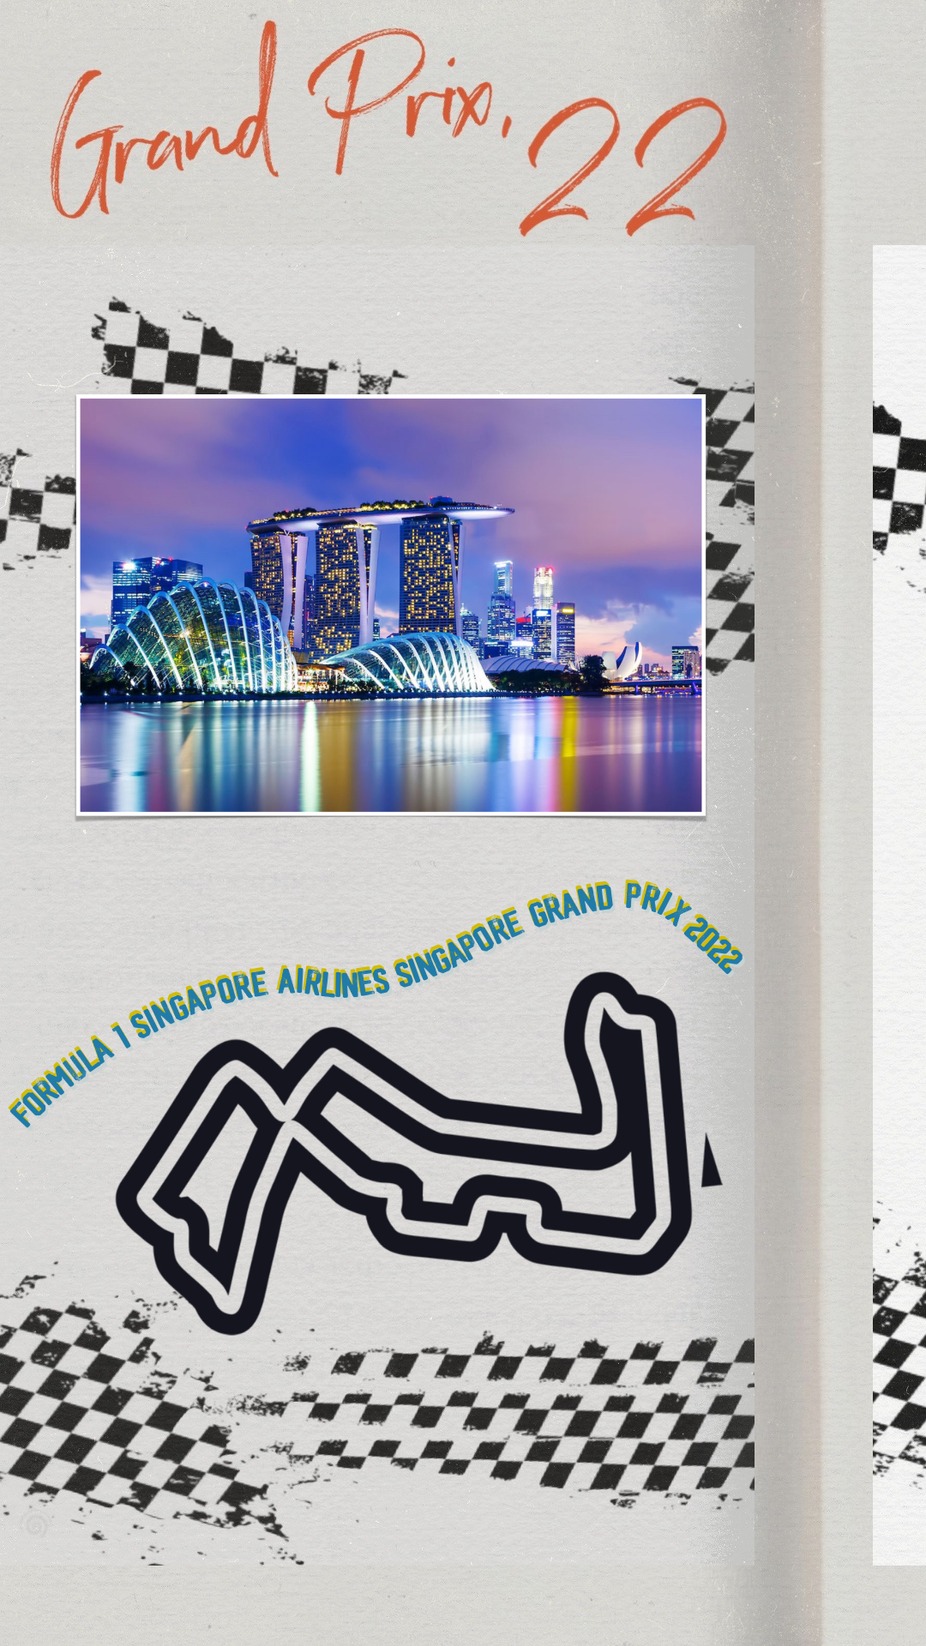 Formula 1 Singapore Airlines Singapore Grand Prix 2022 event photo